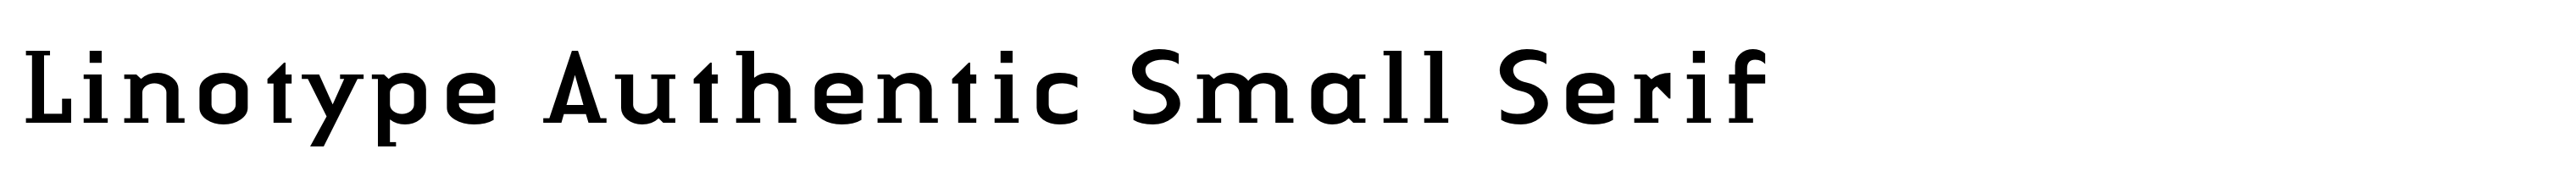 Linotype Authentic Small Serif